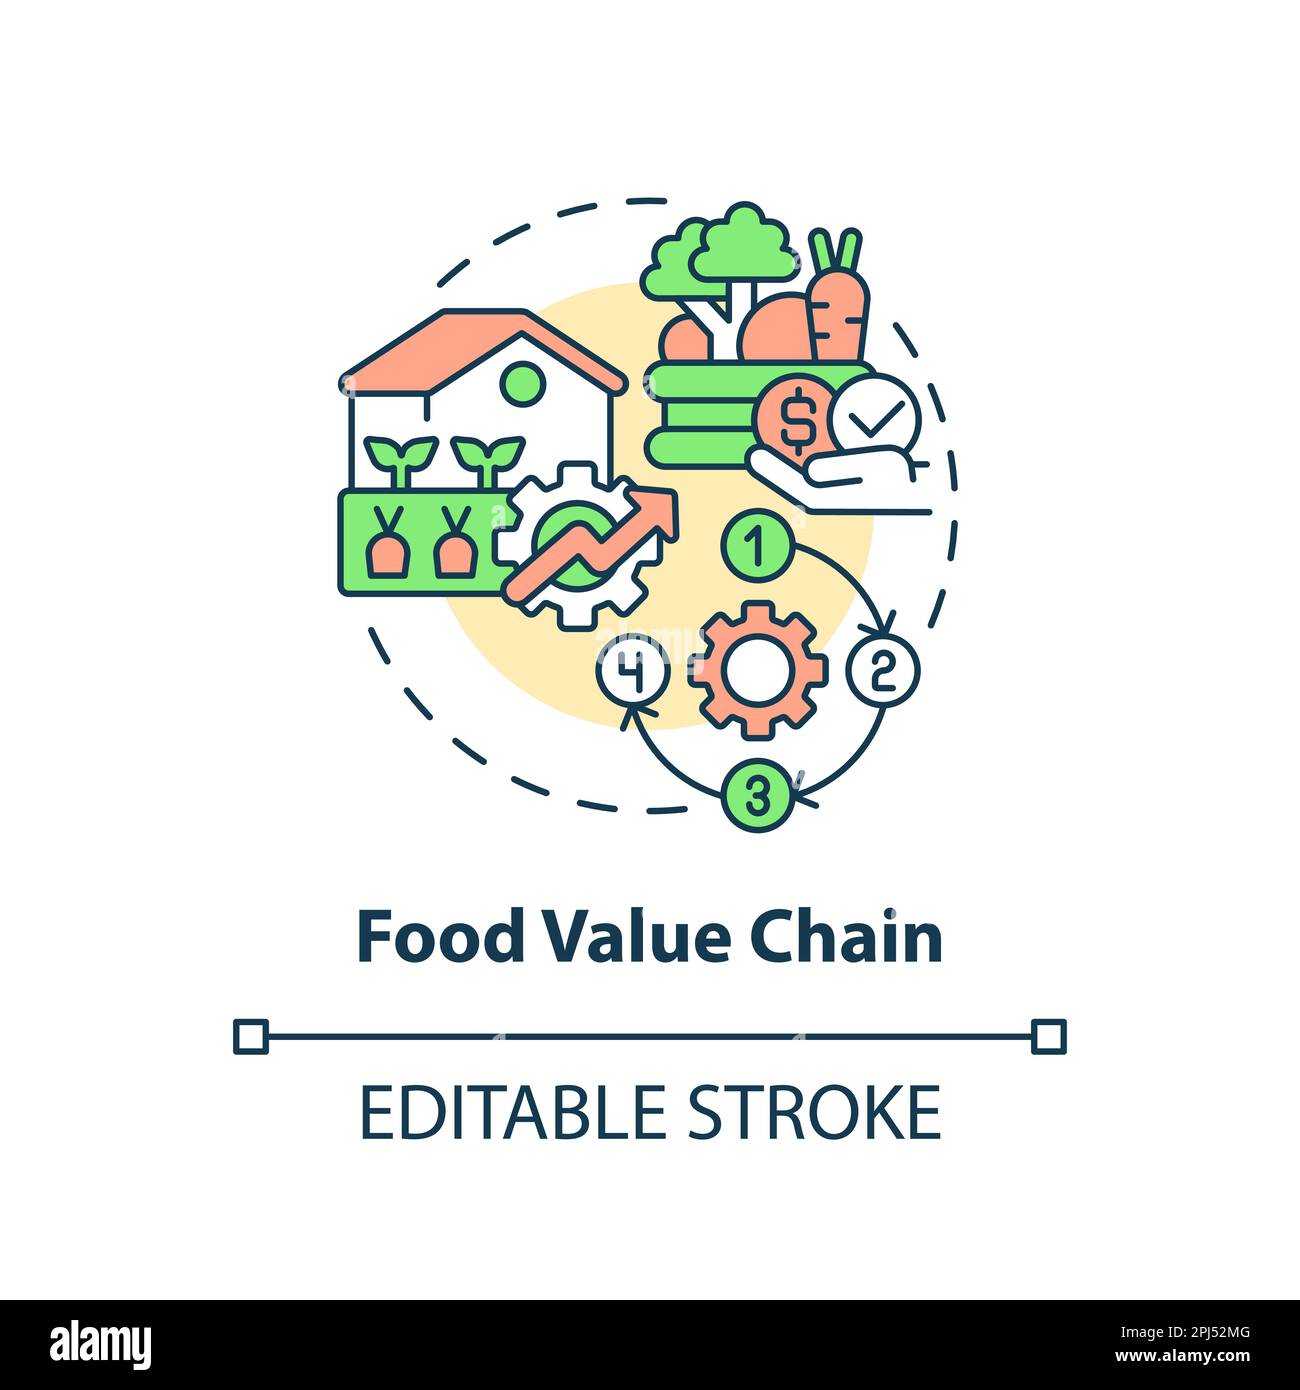 Food value chain concept icon Stock Vector